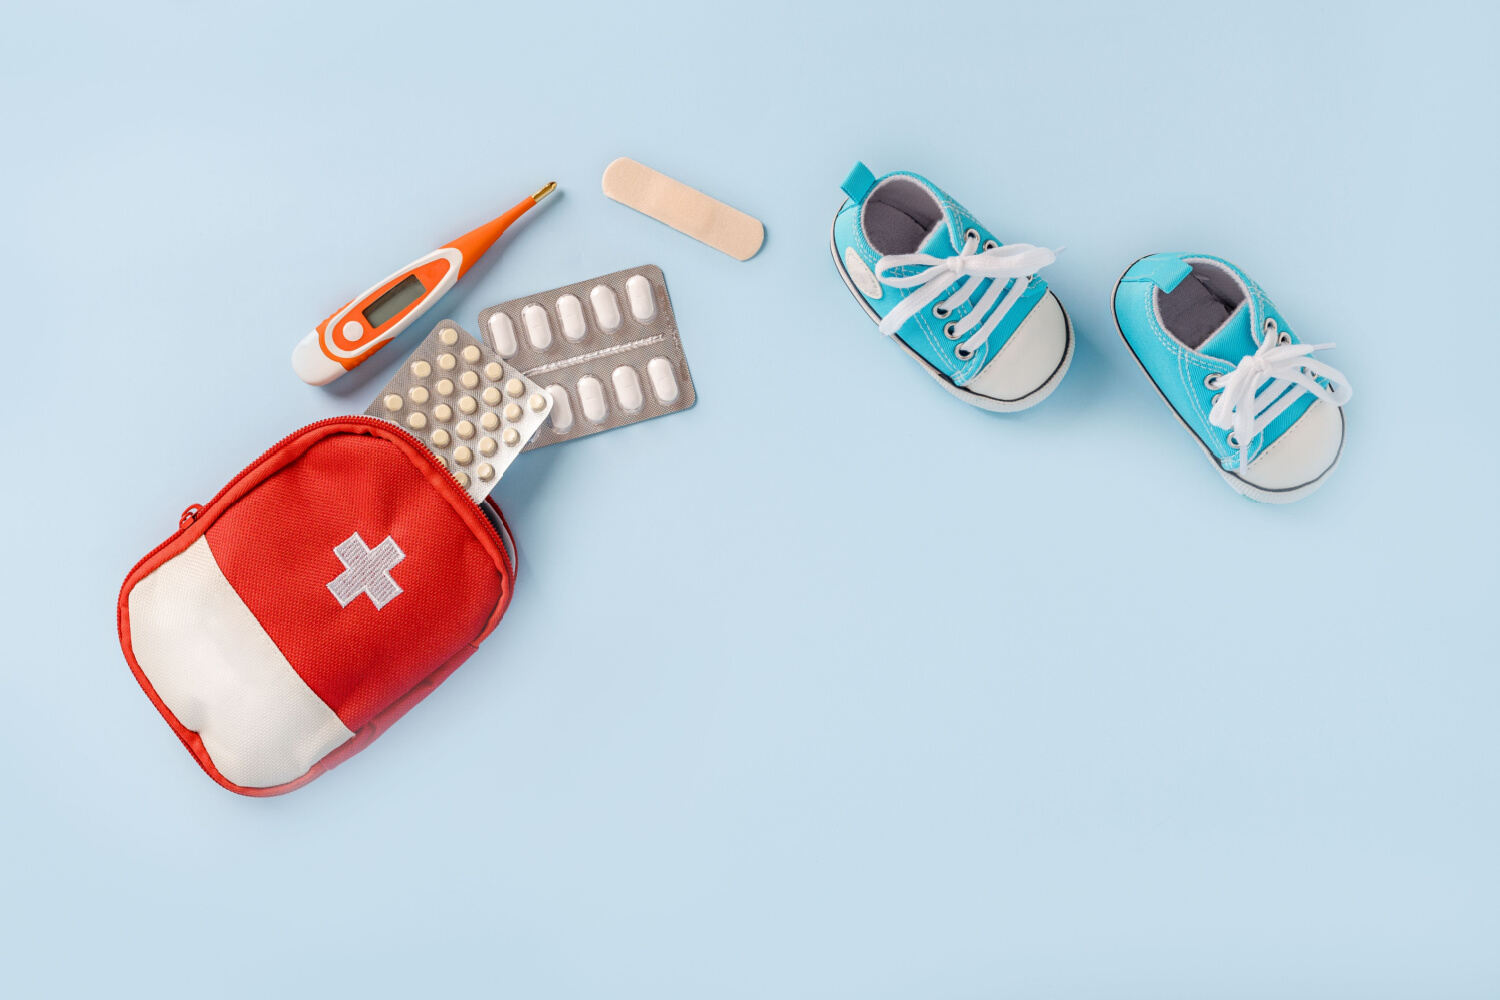 Toddler first aid kit essentials